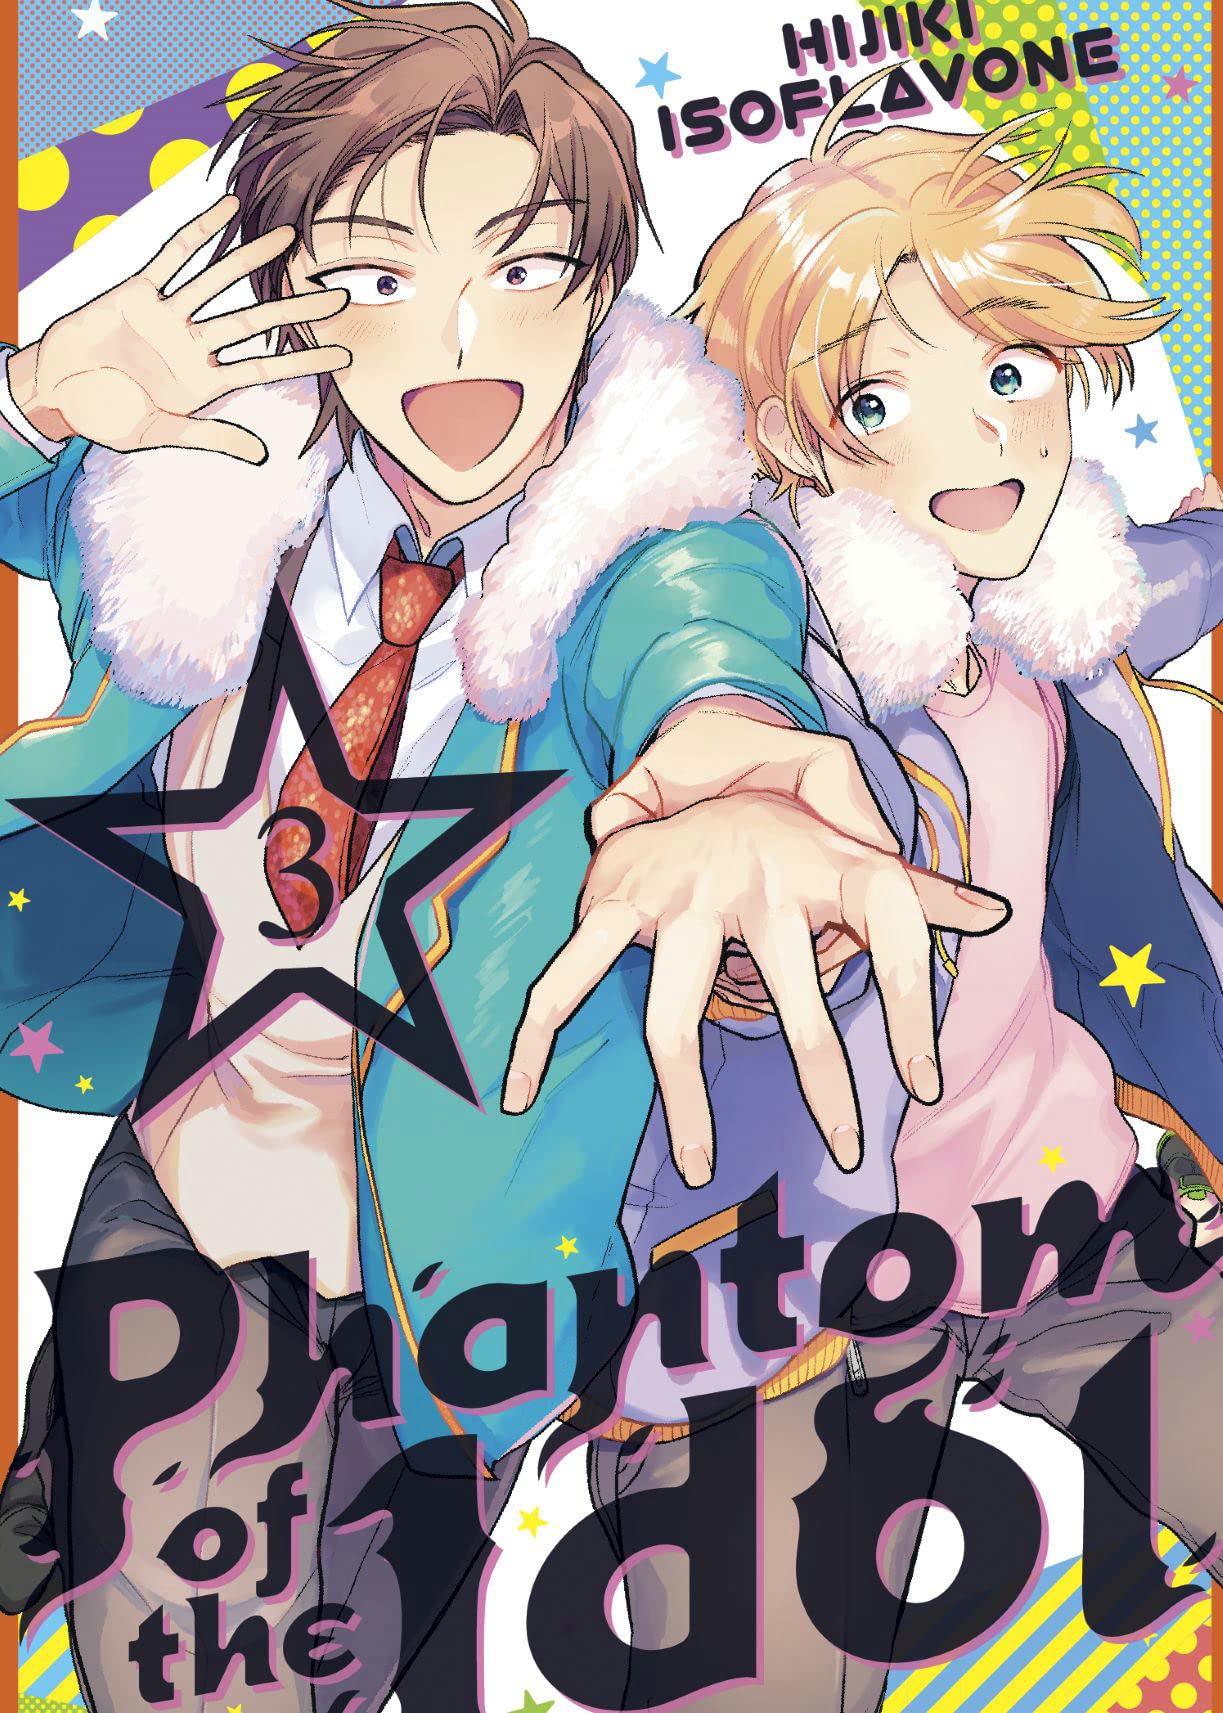 Phantom of the Idol - Volume 3 | Hijiki Isoflavone